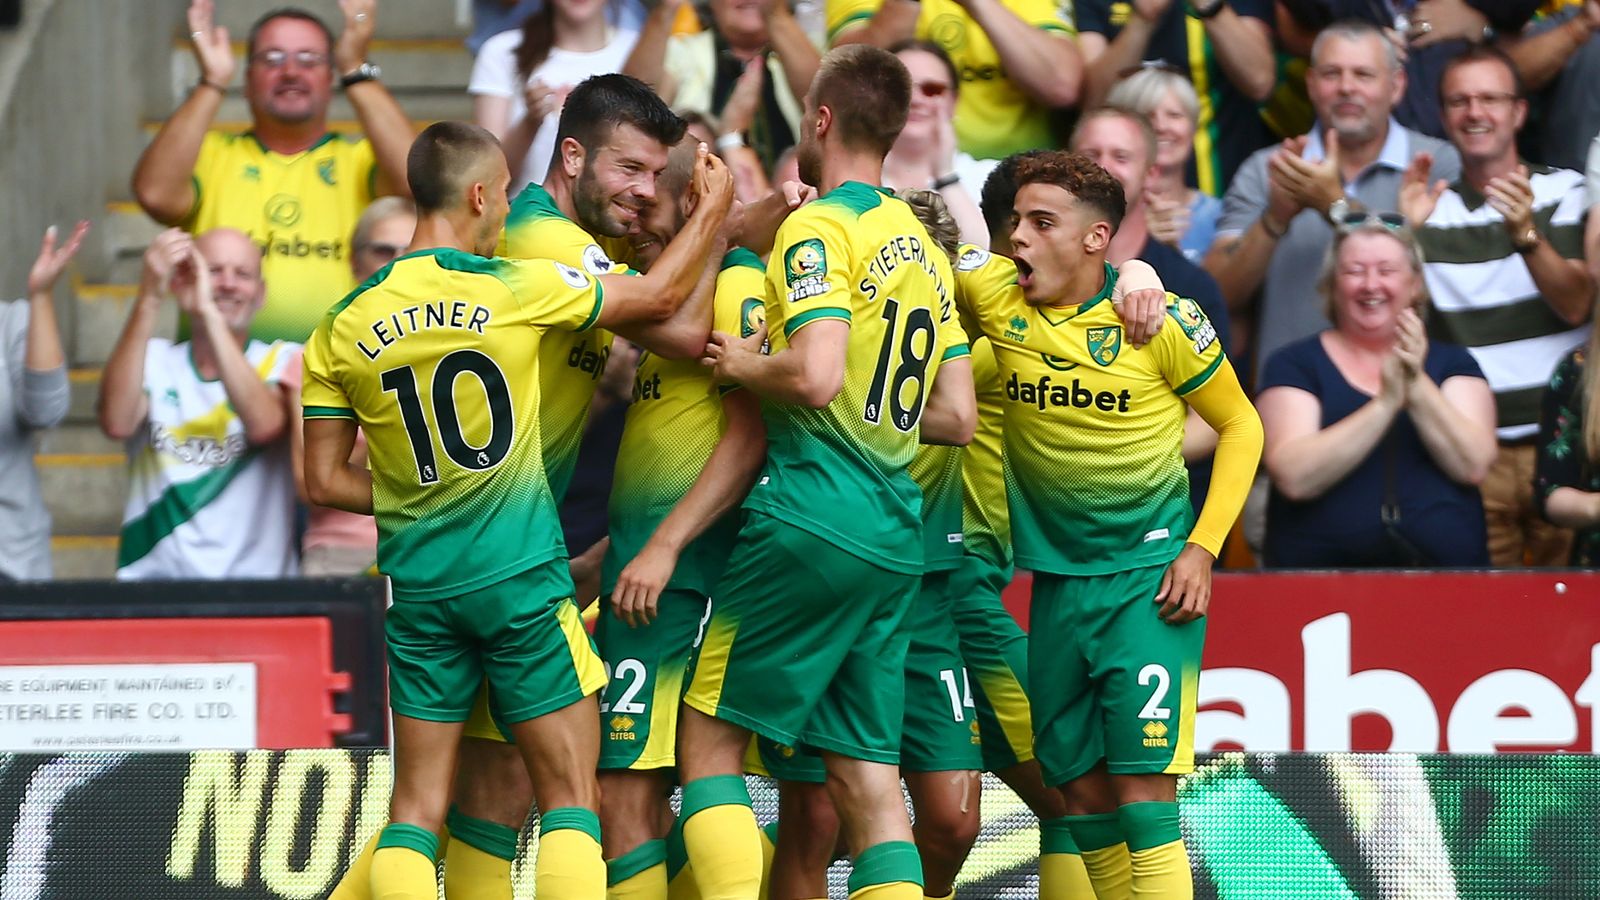 Norwich 3 - 1 Newcastle - Match Report & Highlights